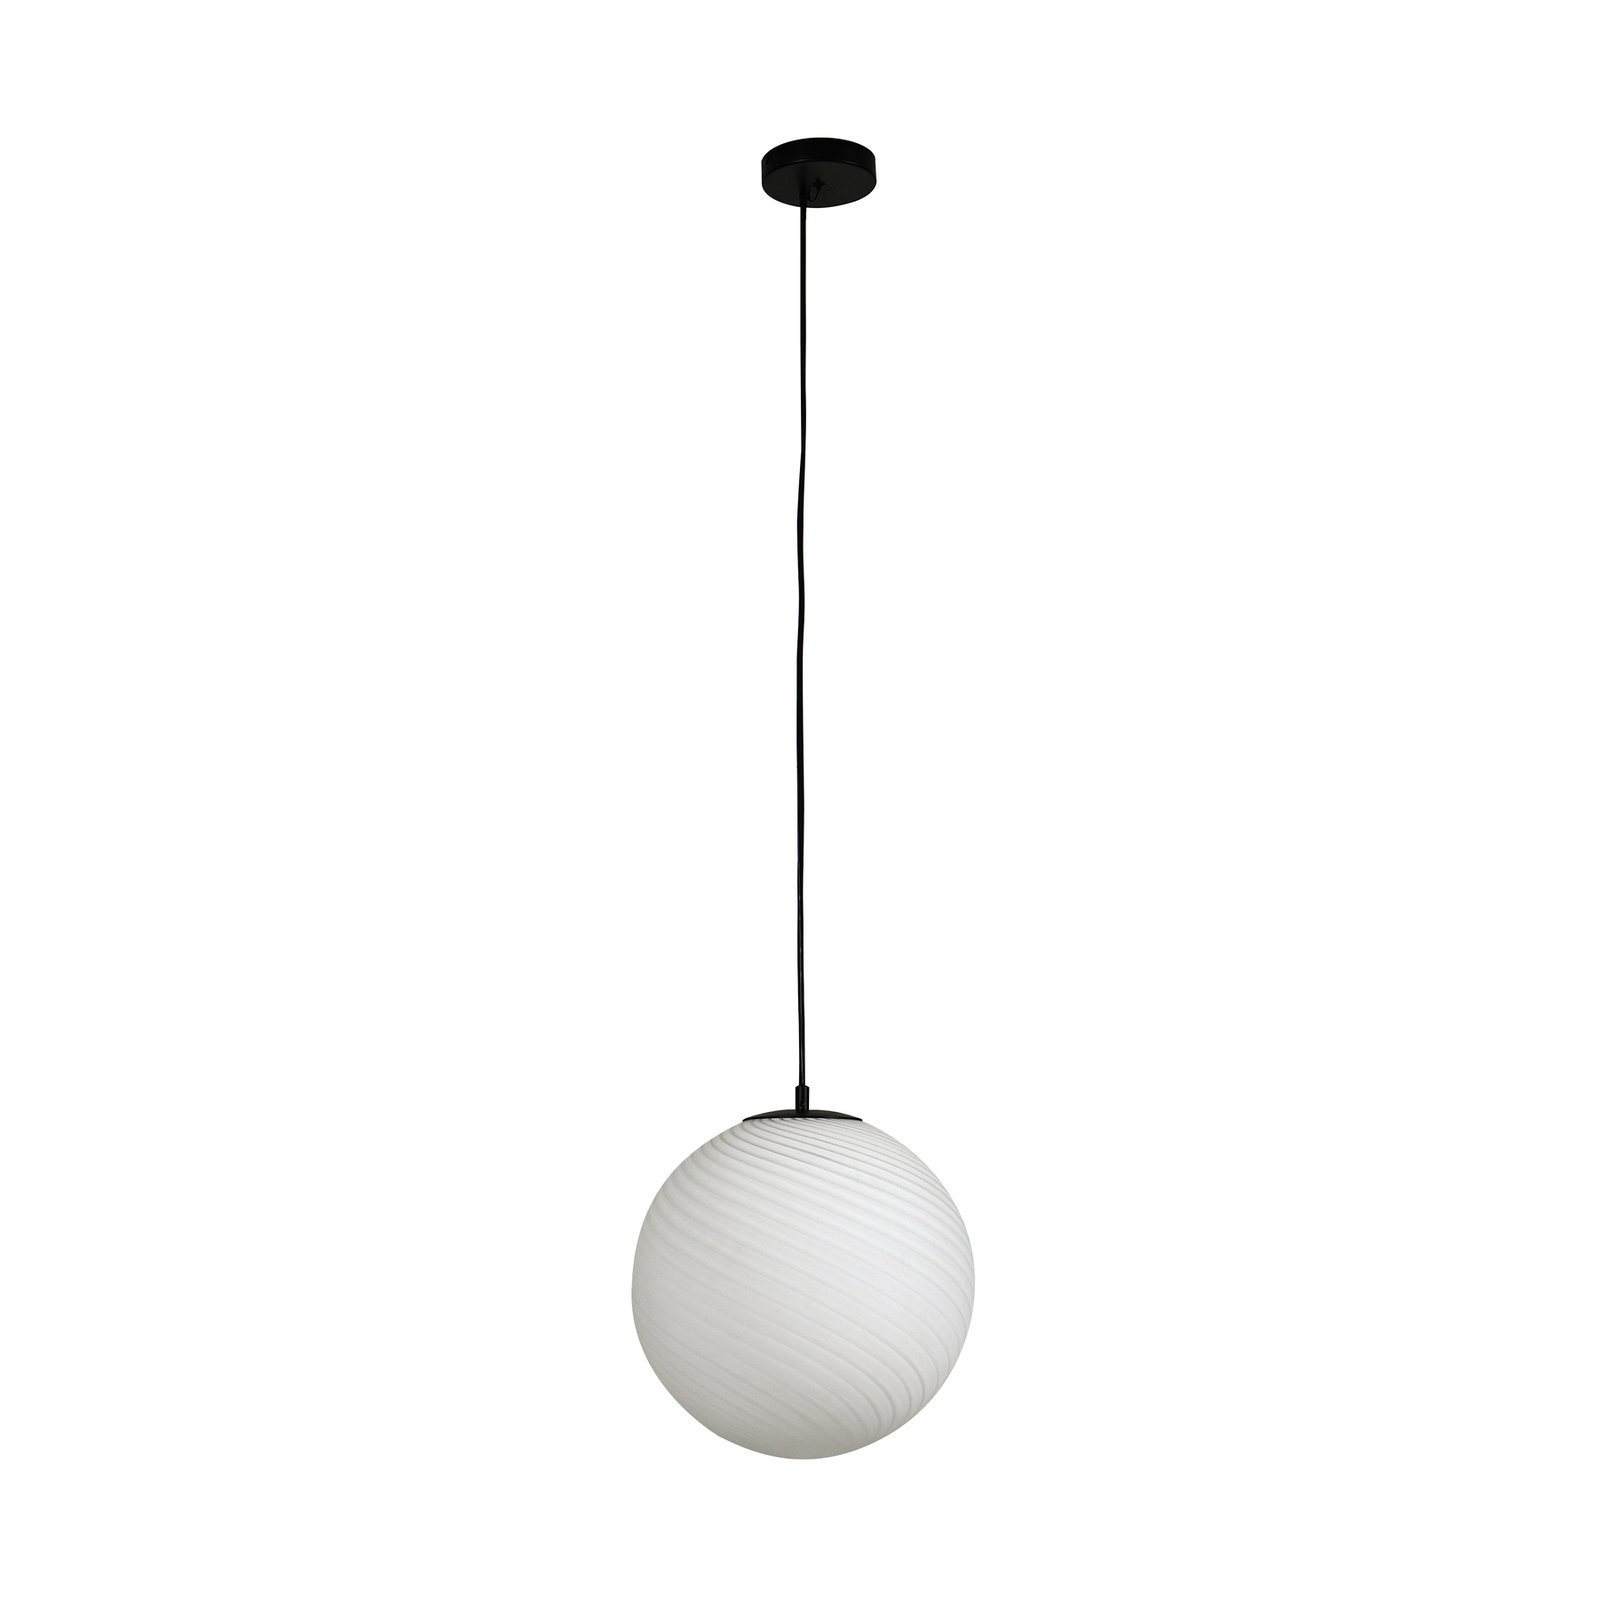 Lucande hanglamp Kestralia, wit, glas, Ø 36,8 cm, E27